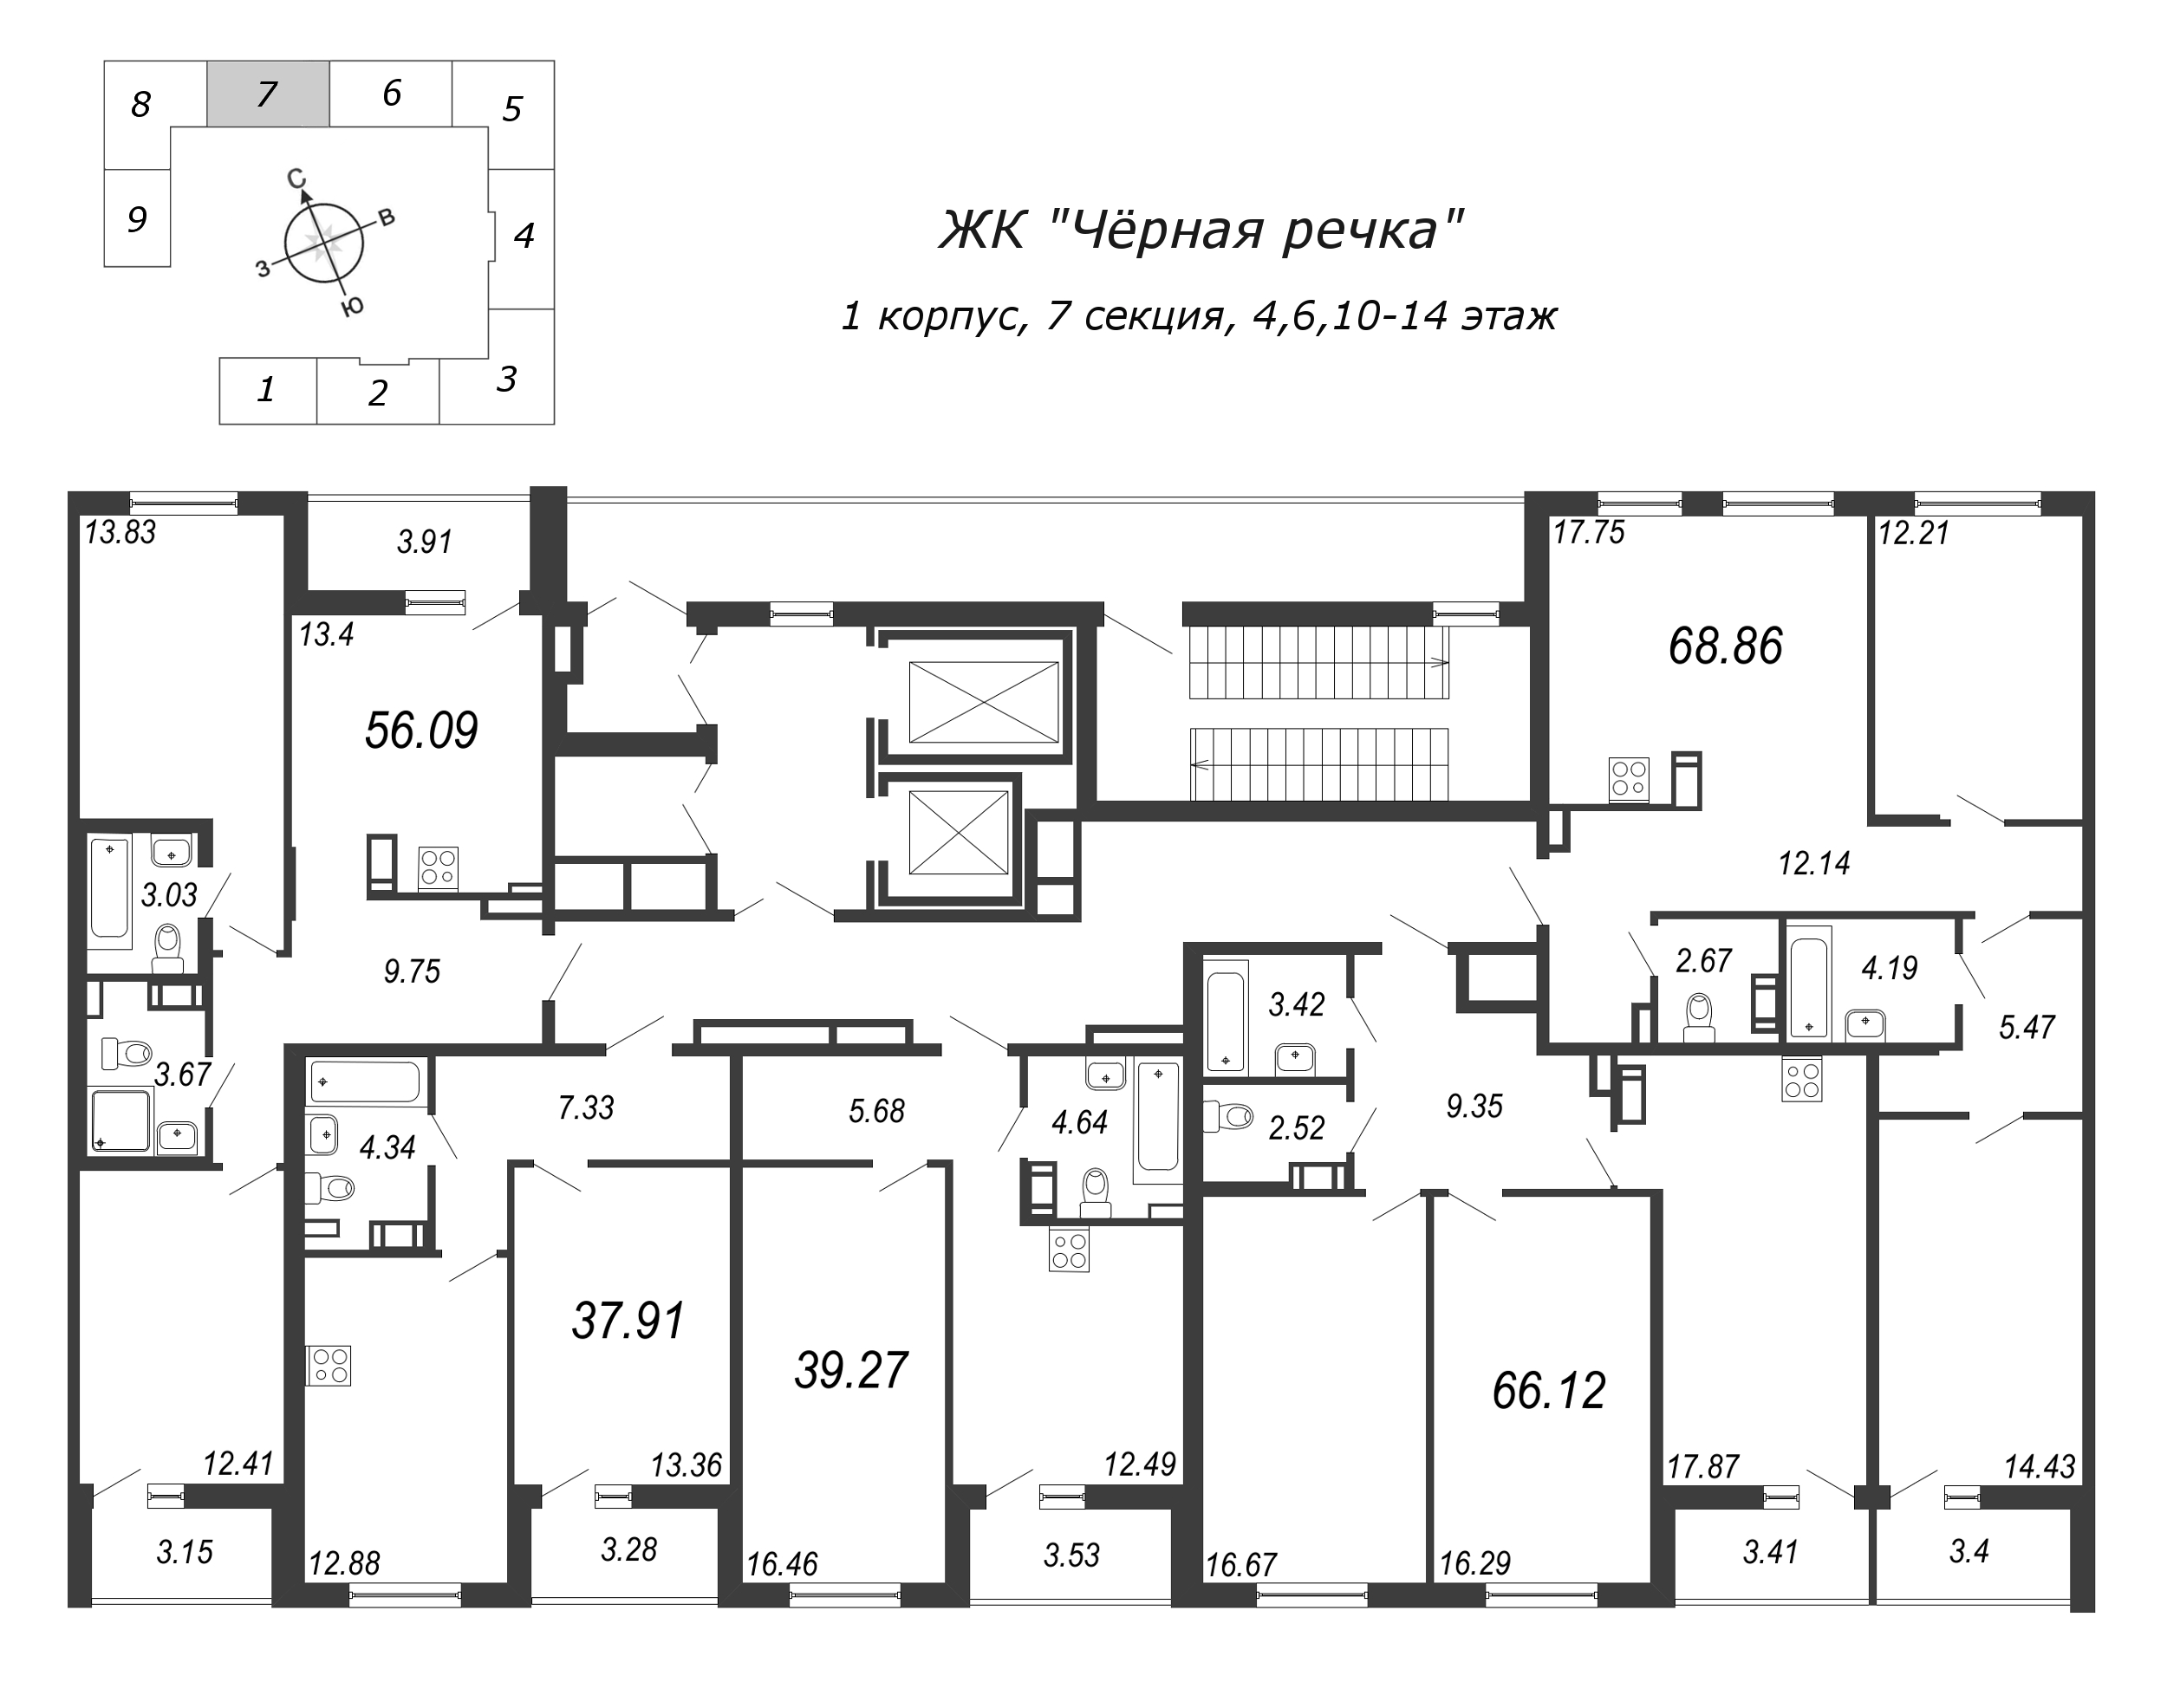 3-комнатная (Евро) квартира, 66.12 м² - планировка этажа